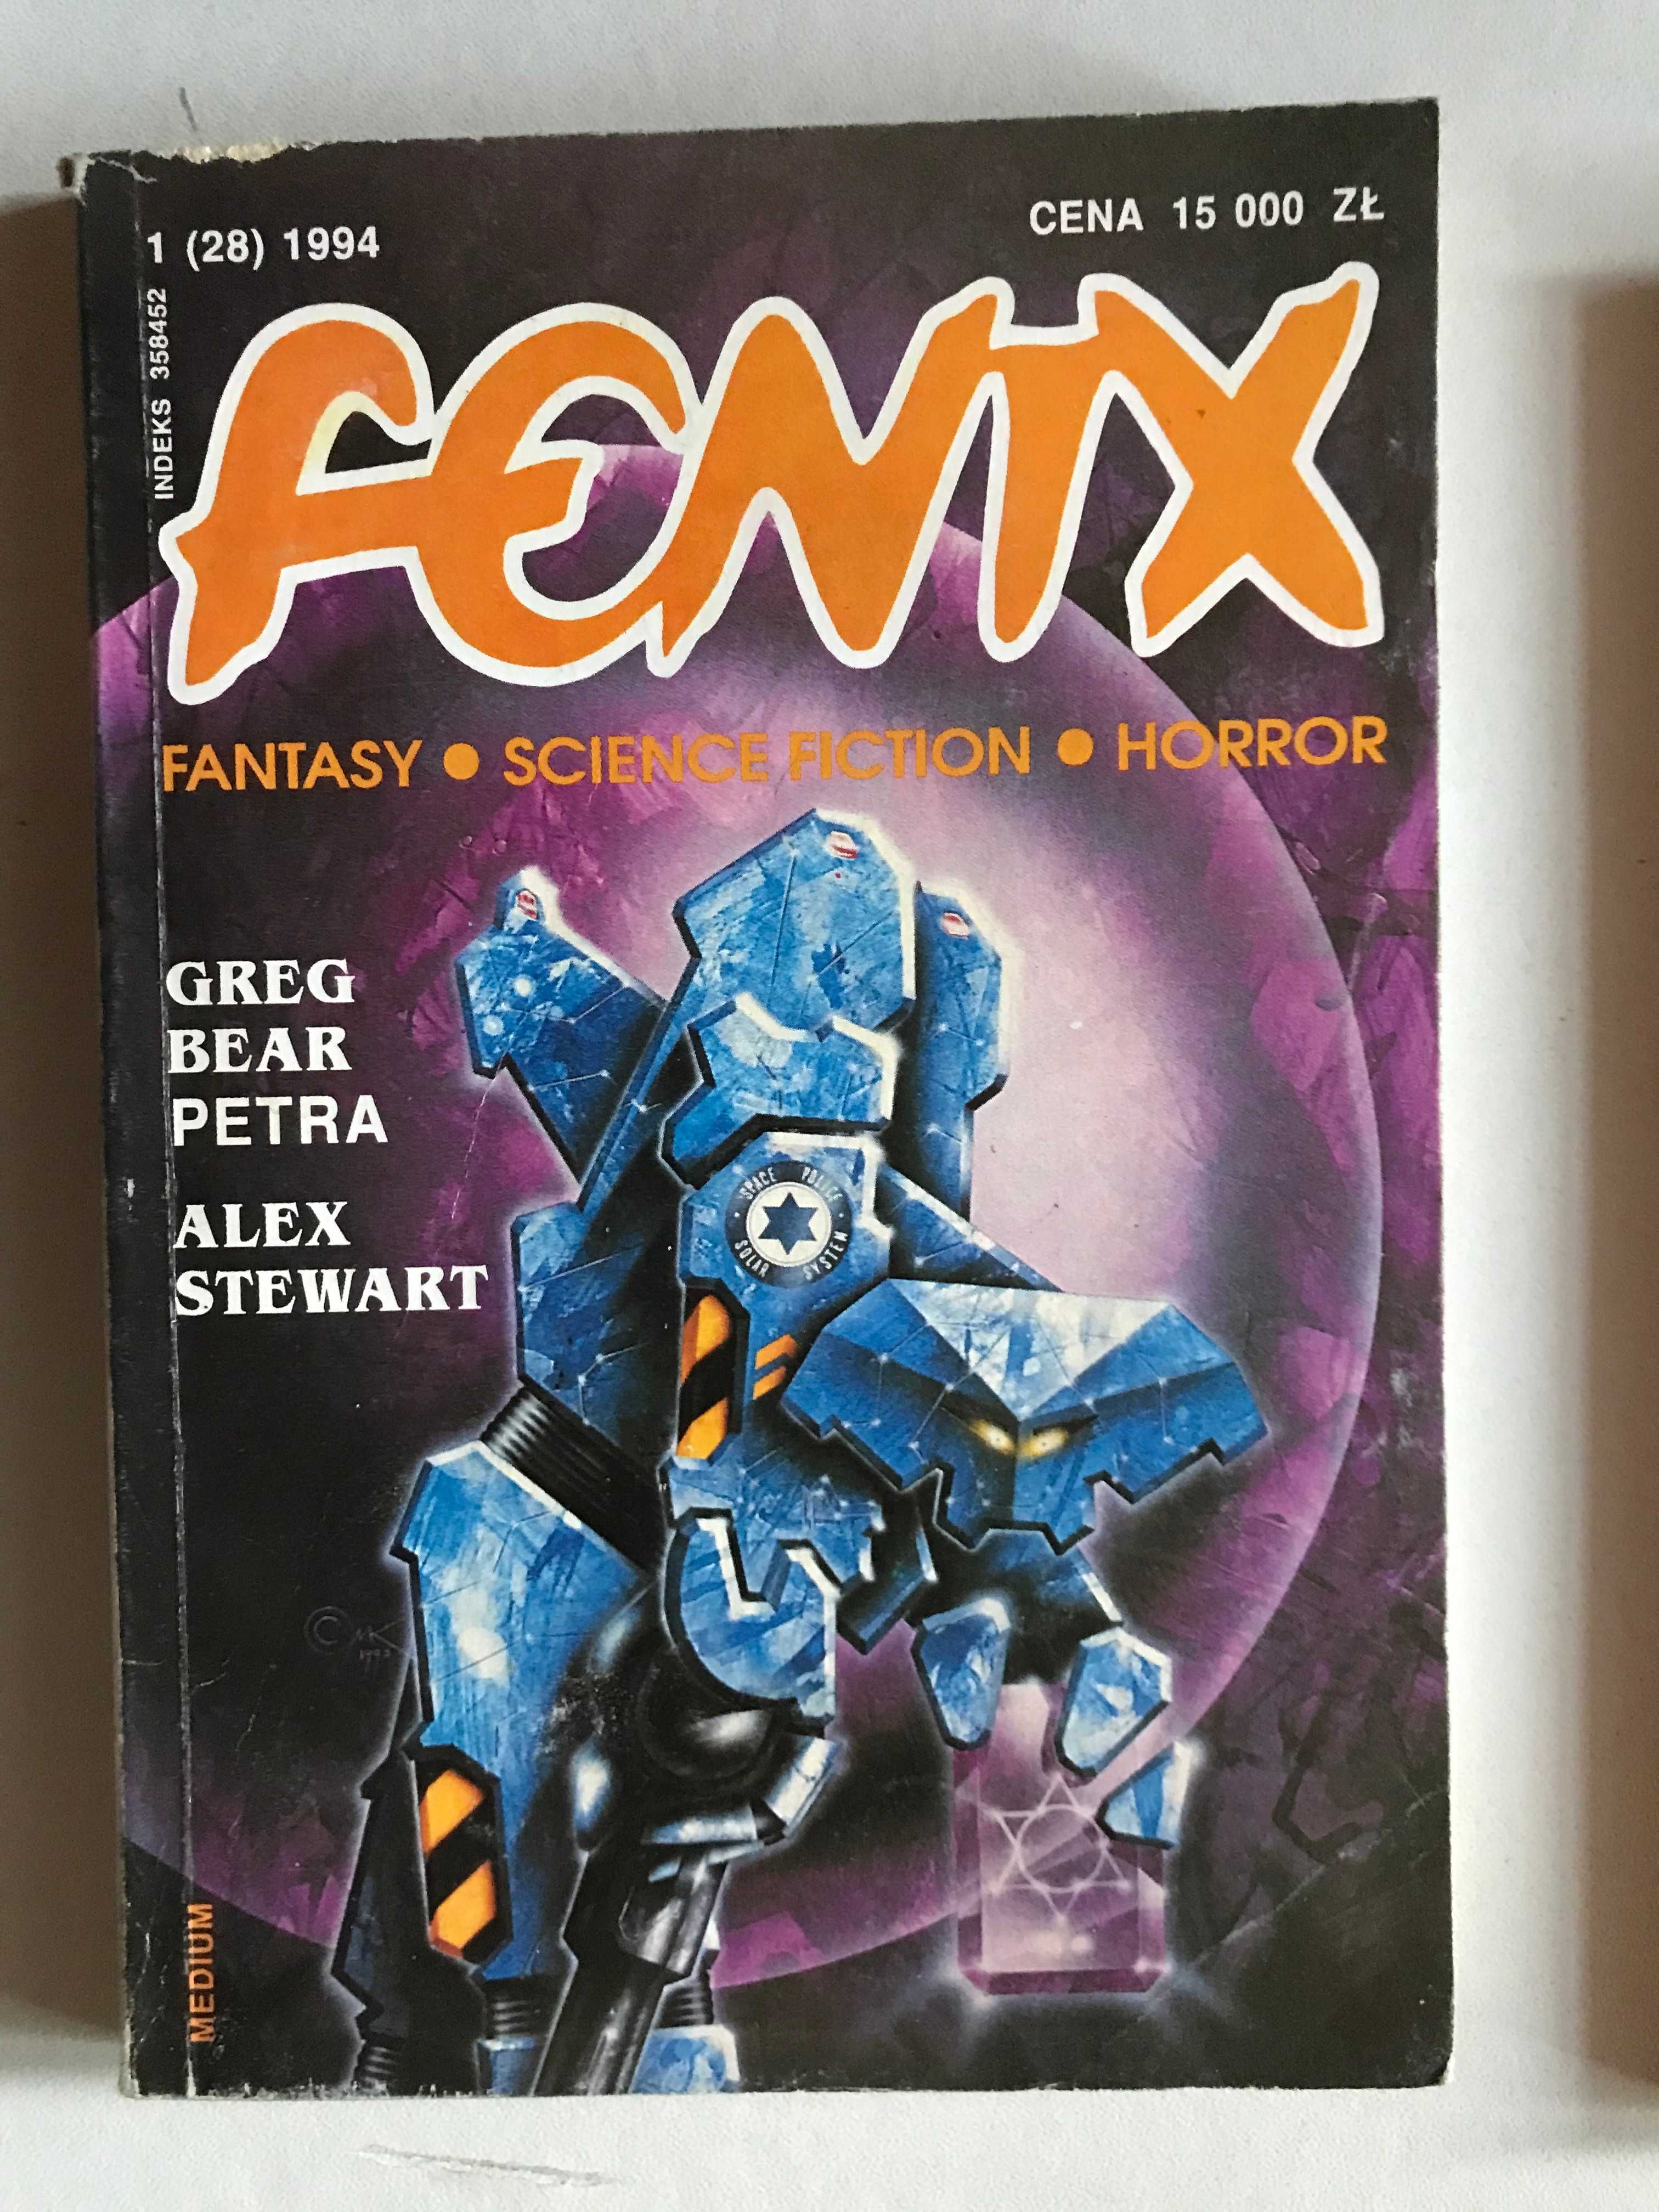 Czasopismo Fenix nr 1 1994 fantasy science fiction horror